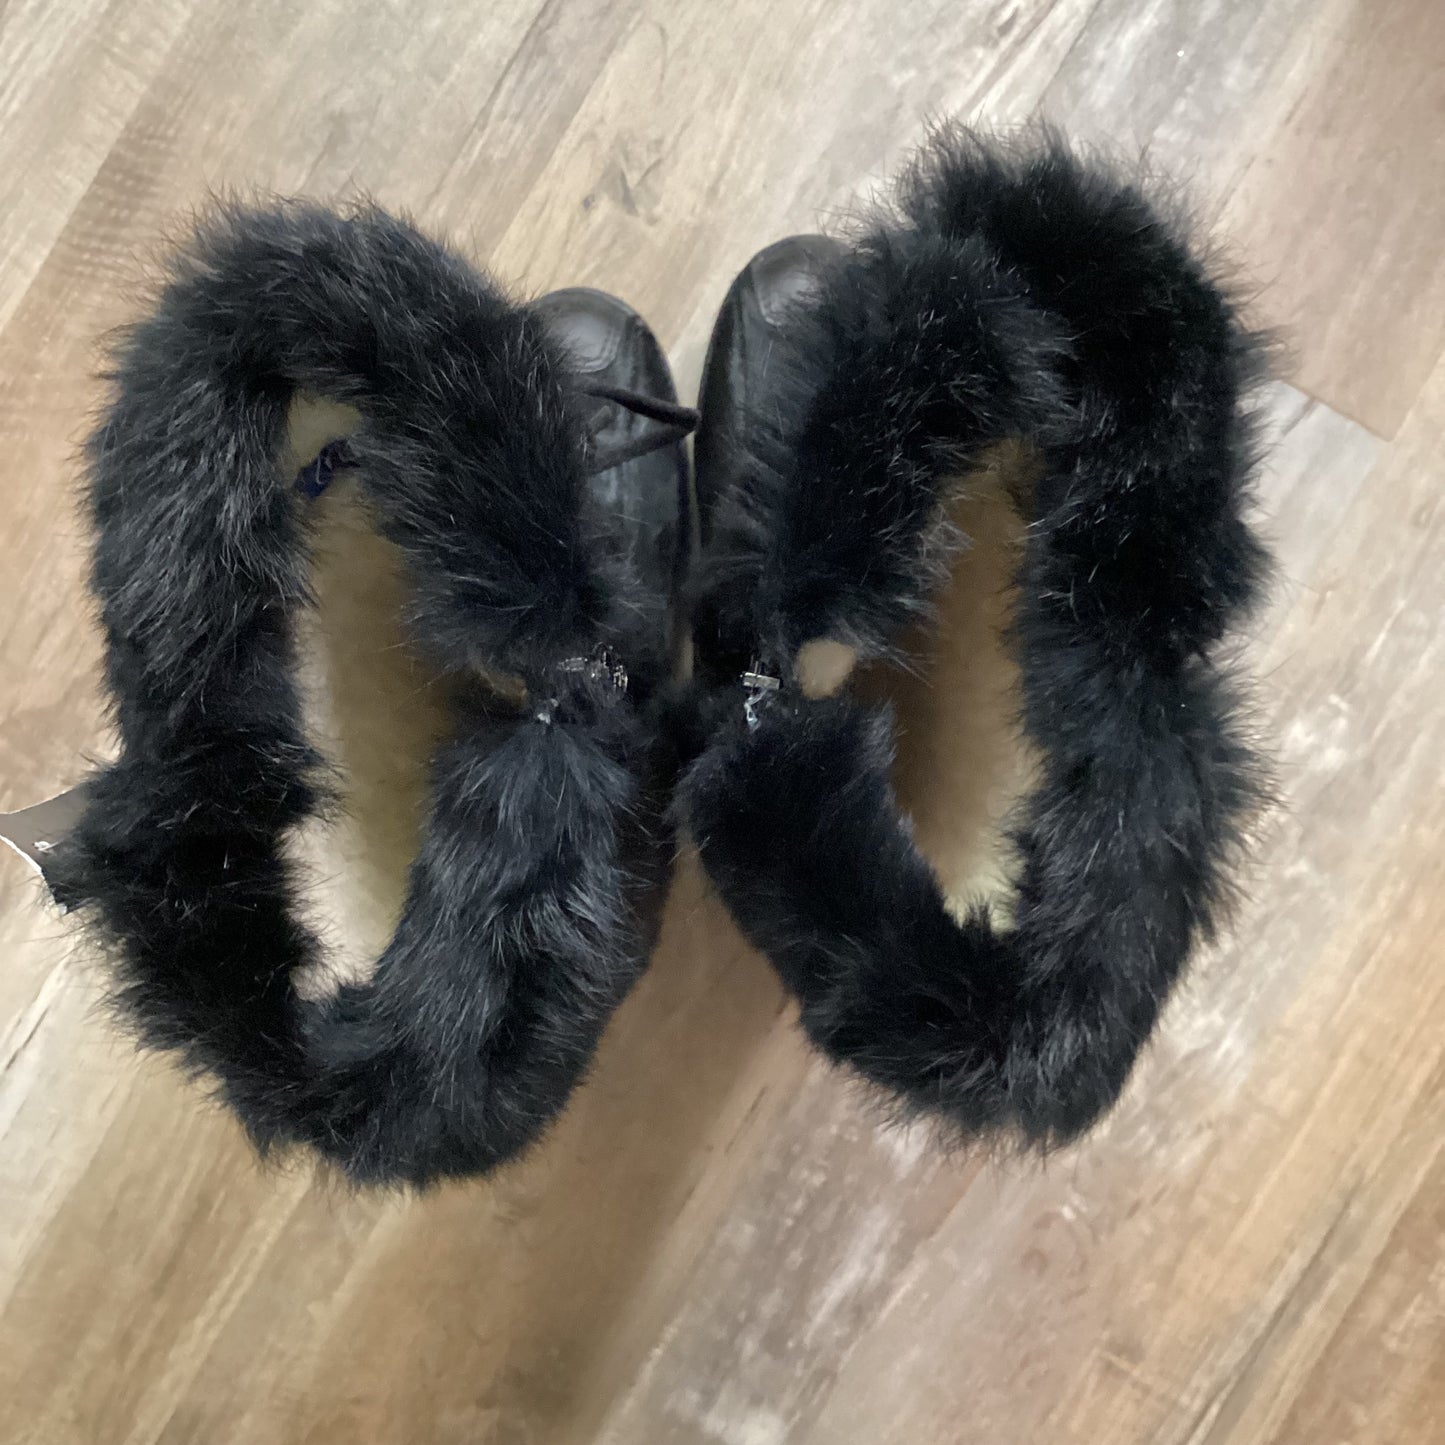 Pajar Size 5.5 Black Boots